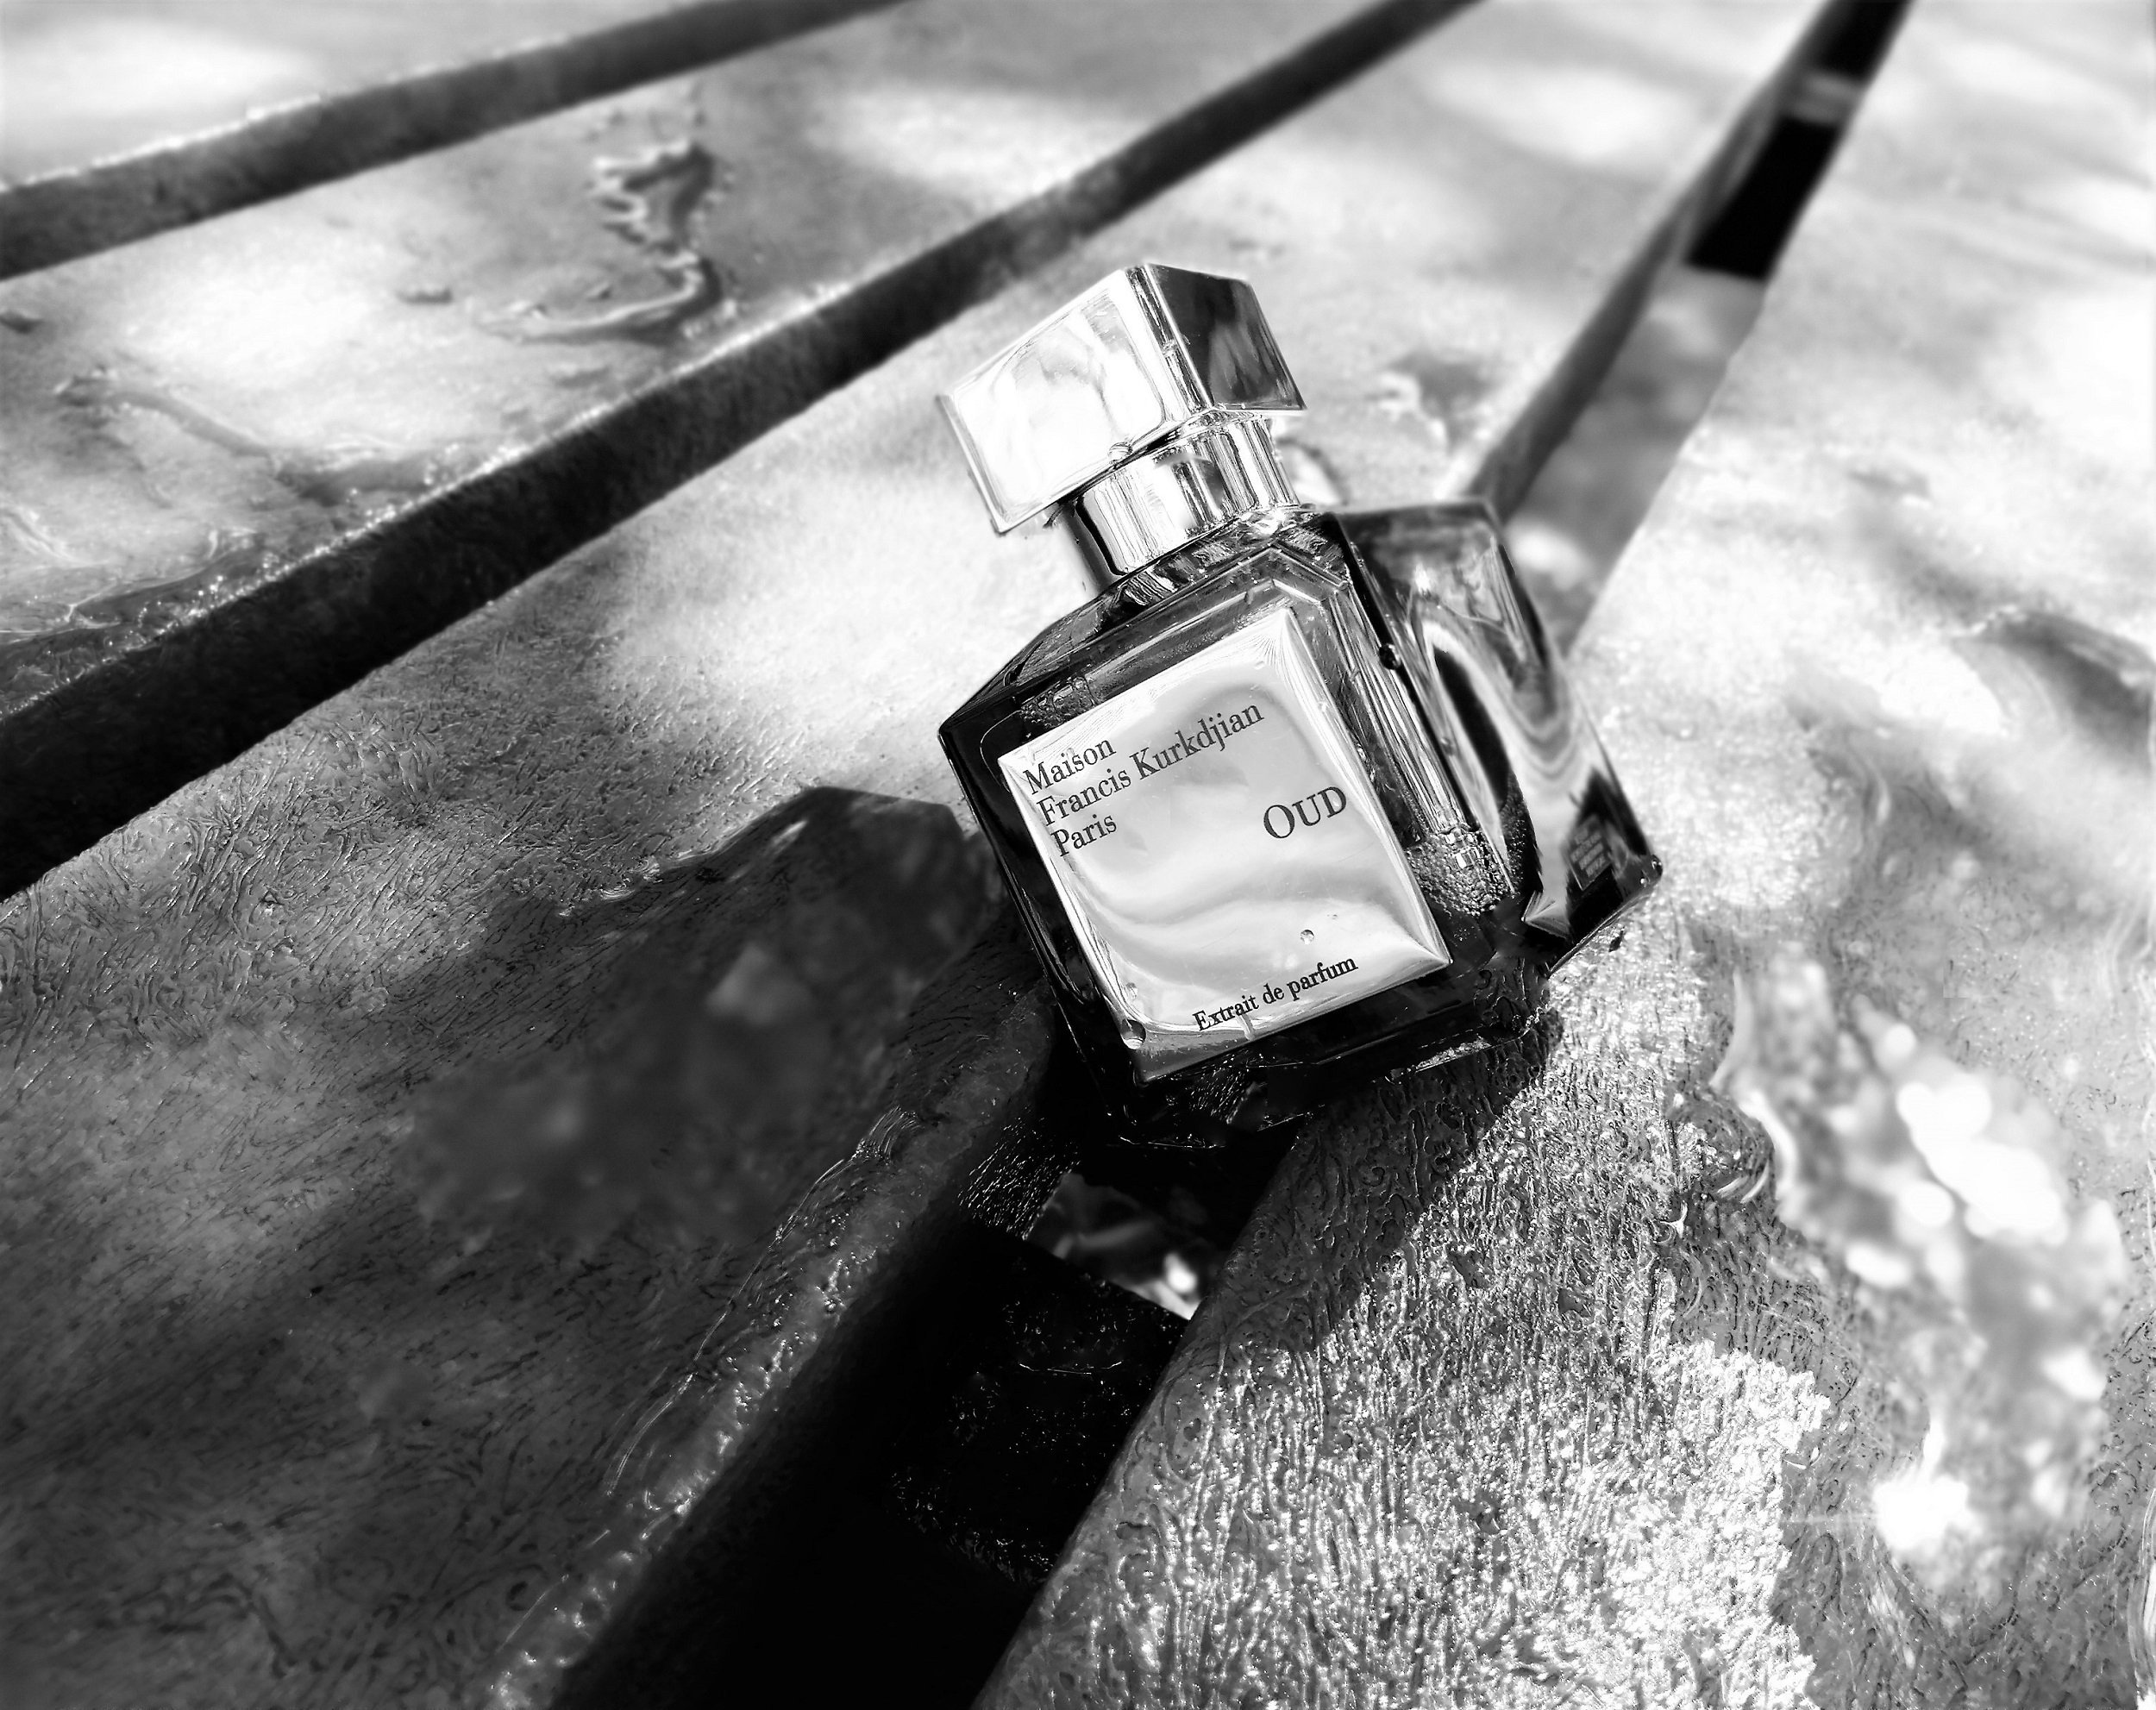 Maison Francis Kurkdjian, France's Most Elite Parfumer is Coming To Miami -  Haute Living